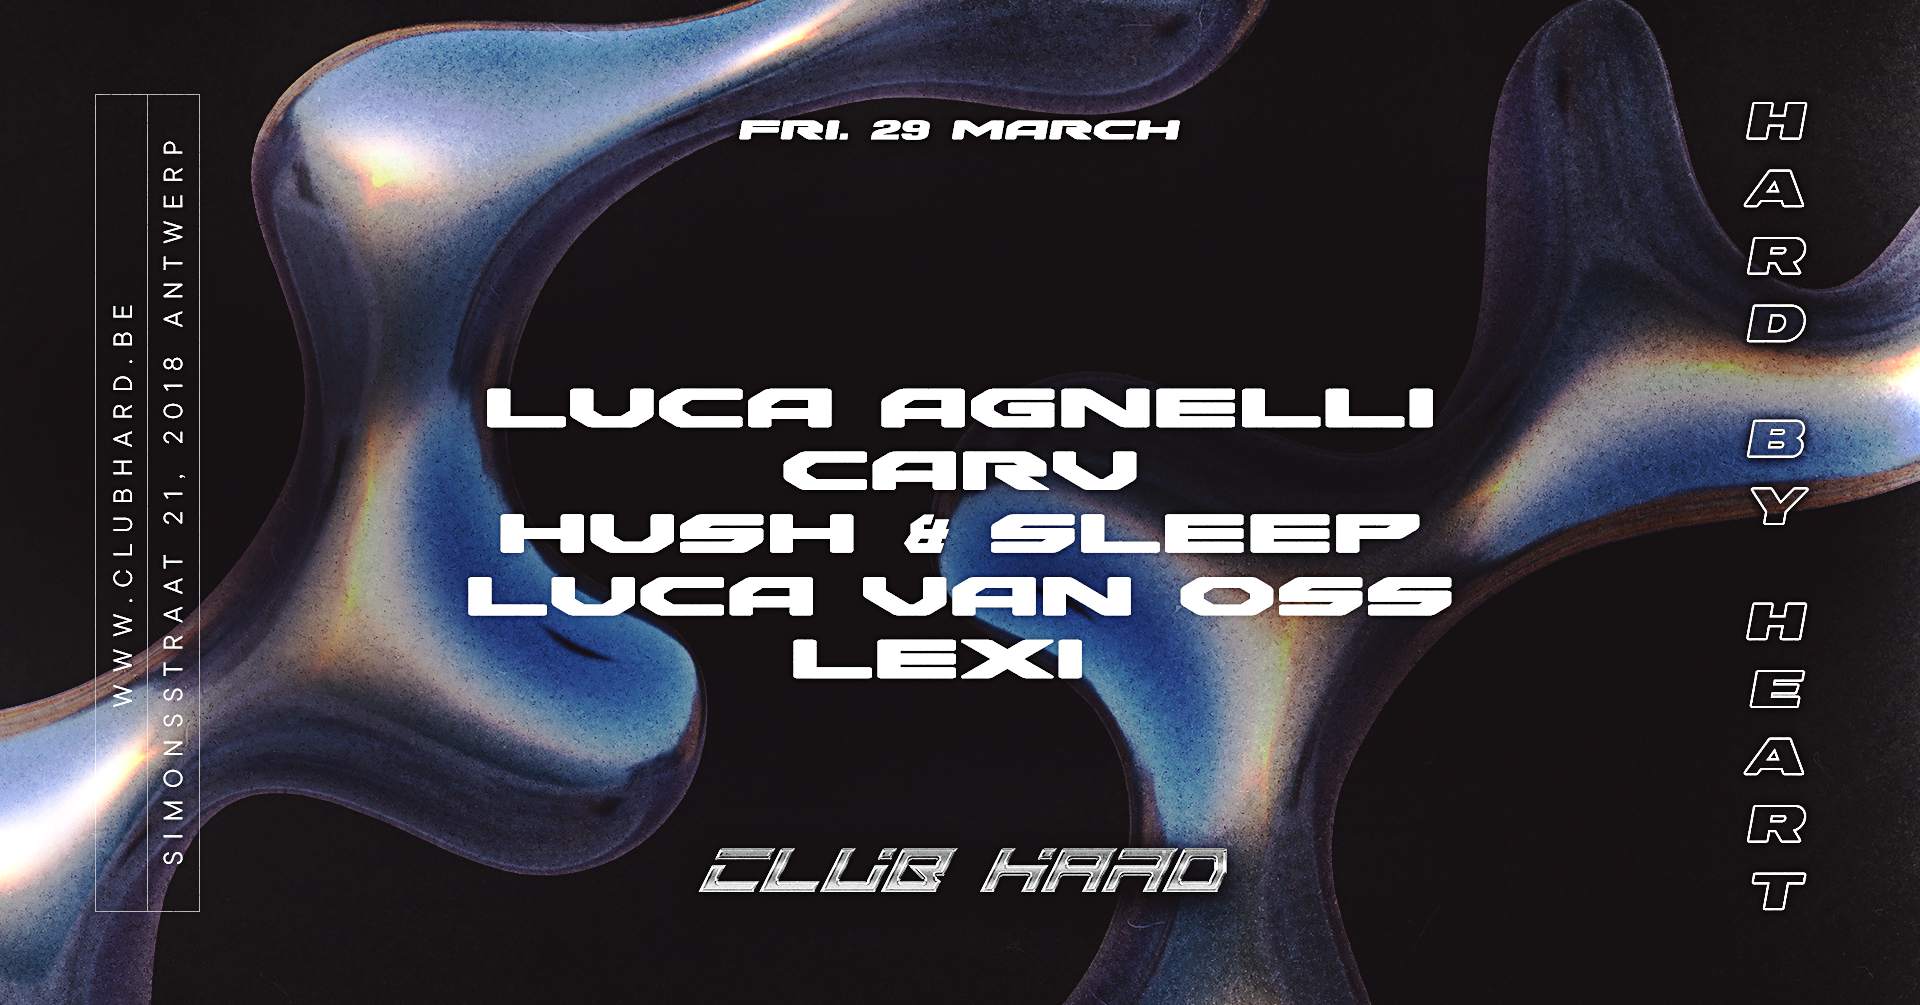 Club Hard W/ Luca Agnelli, CARV, Hush & Sleep, Luca van Oss, LEXI - Página frontal